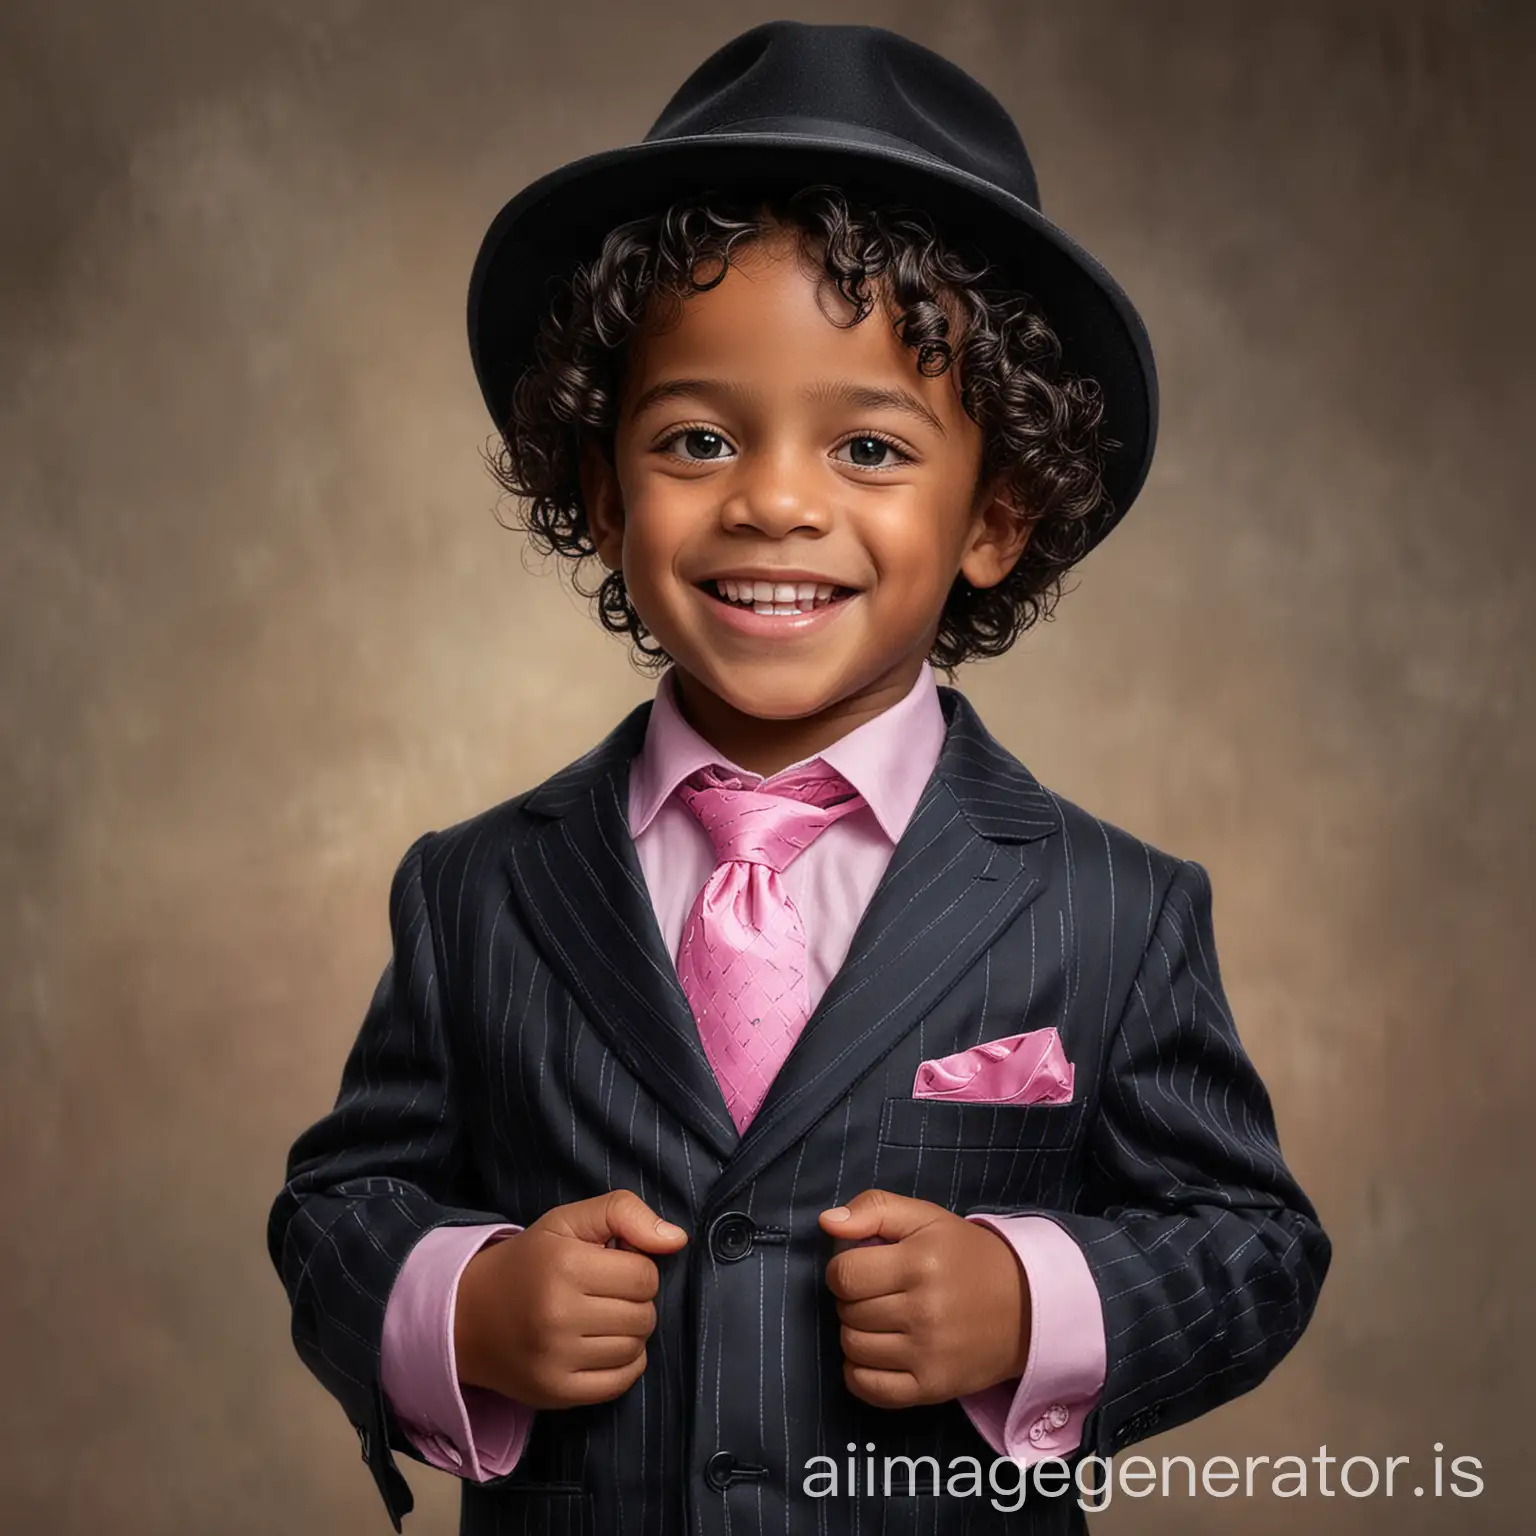 Joyful-4YearOld-Colombian-Boy-in-Stylish-Pinstripe-Suit-and-Pink-Fedora